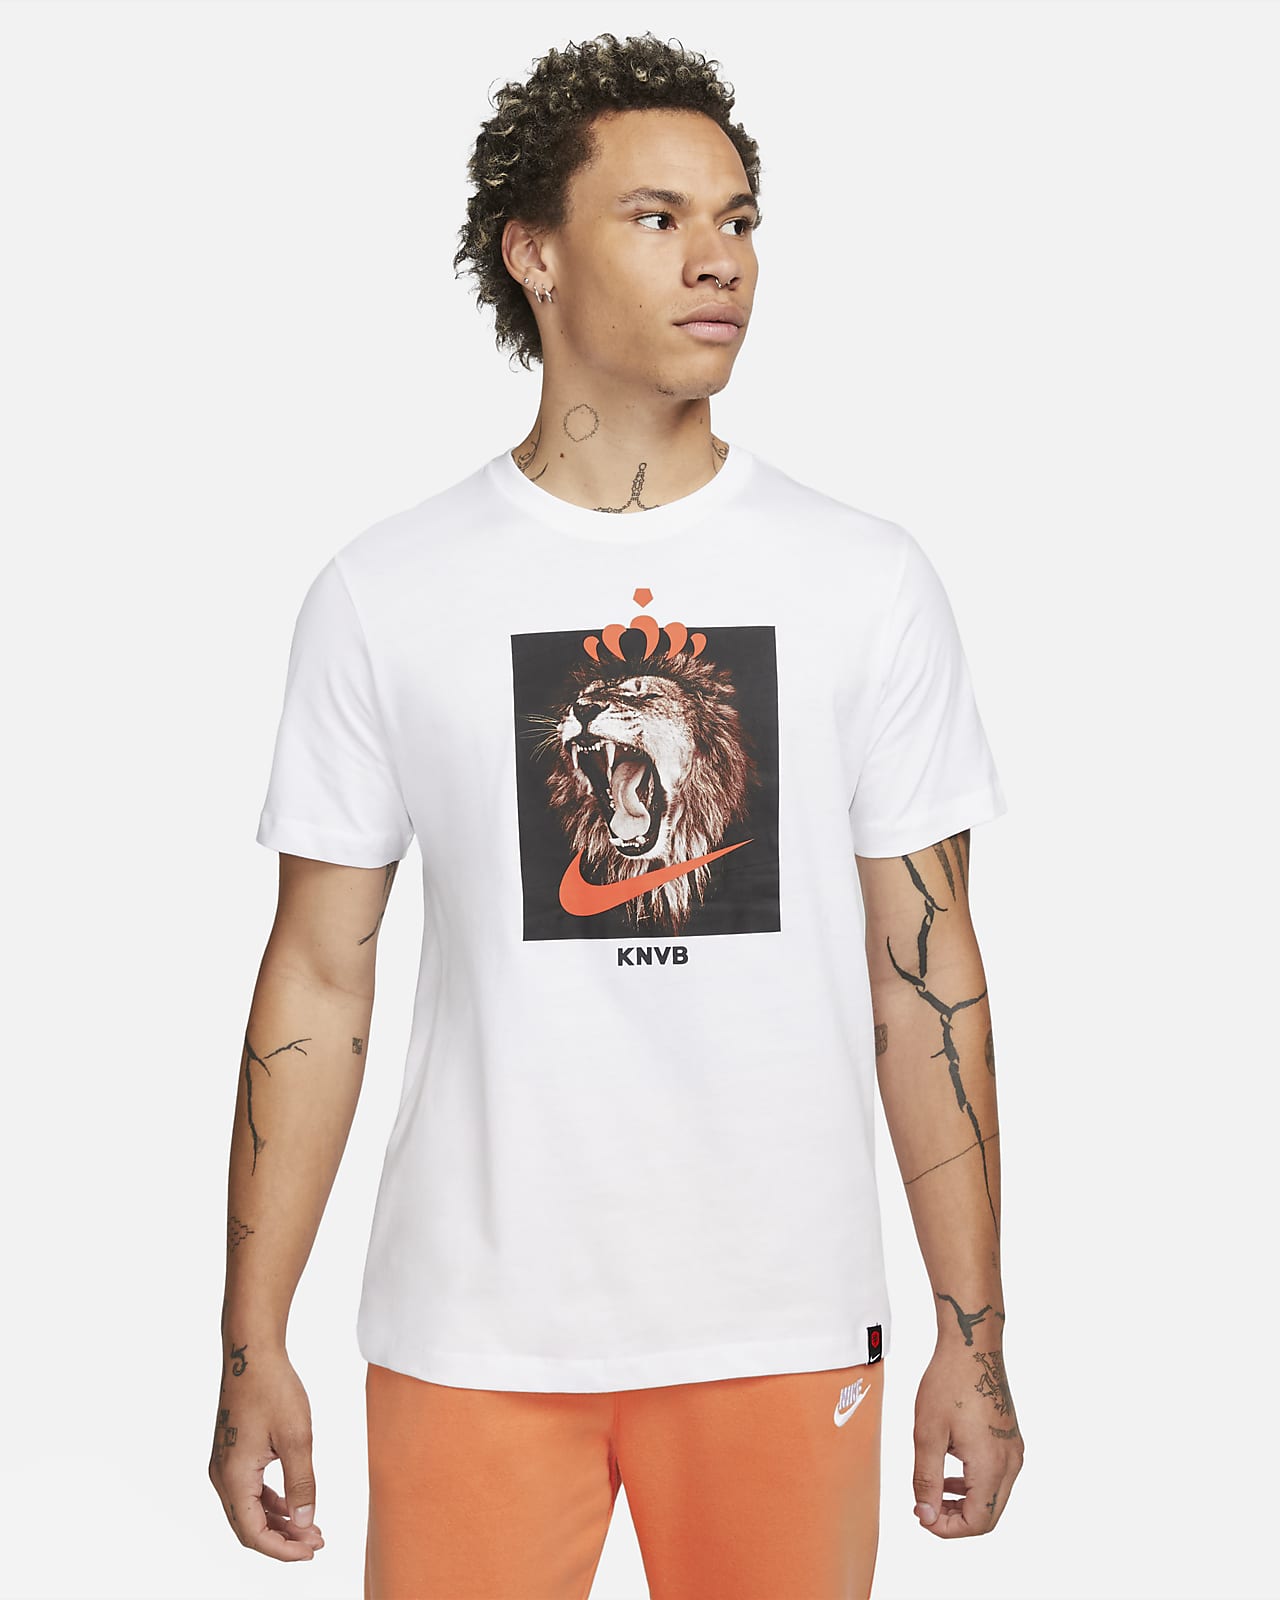 Netherlands Men's Graphic T-Shirt